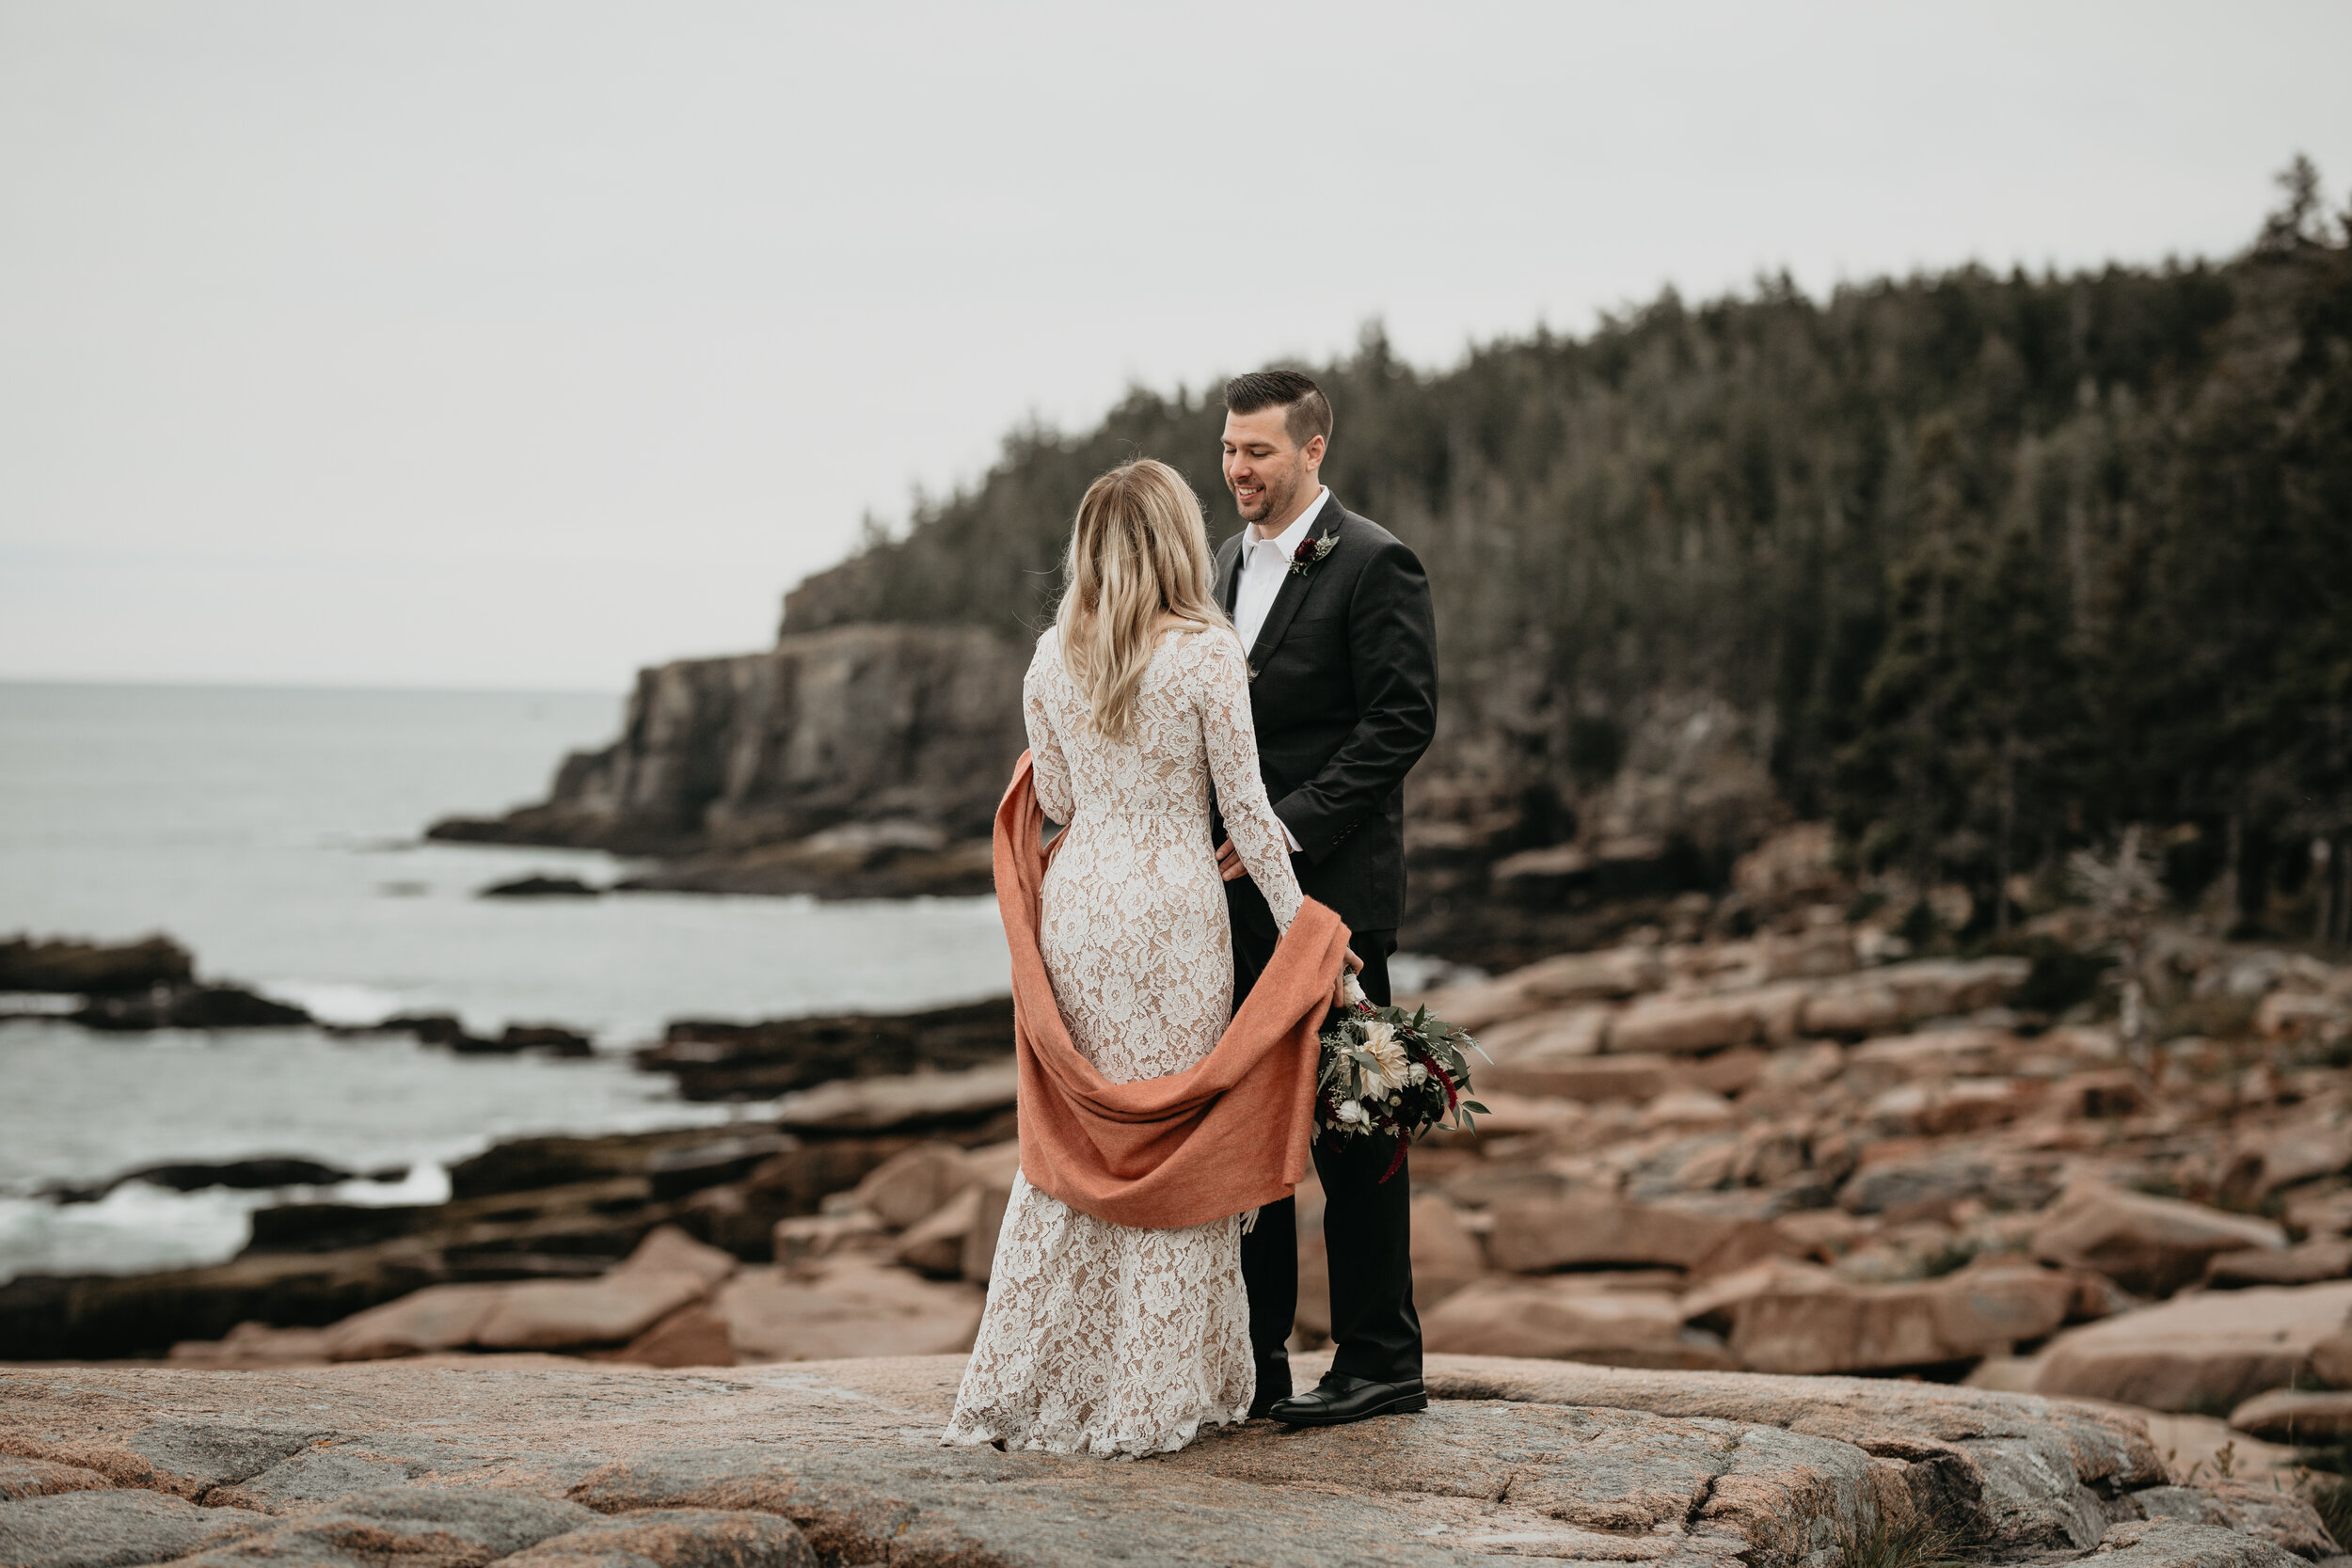 Nicole-Daacke-Photography-Acadia-national-park-elopement-photography-elopement-in-acadia-inspiration-maine-intimate-wedding-destination-elopement-photographer-rainy-day-maine-coast-bar-harbor-elopement-photography-155.jpg